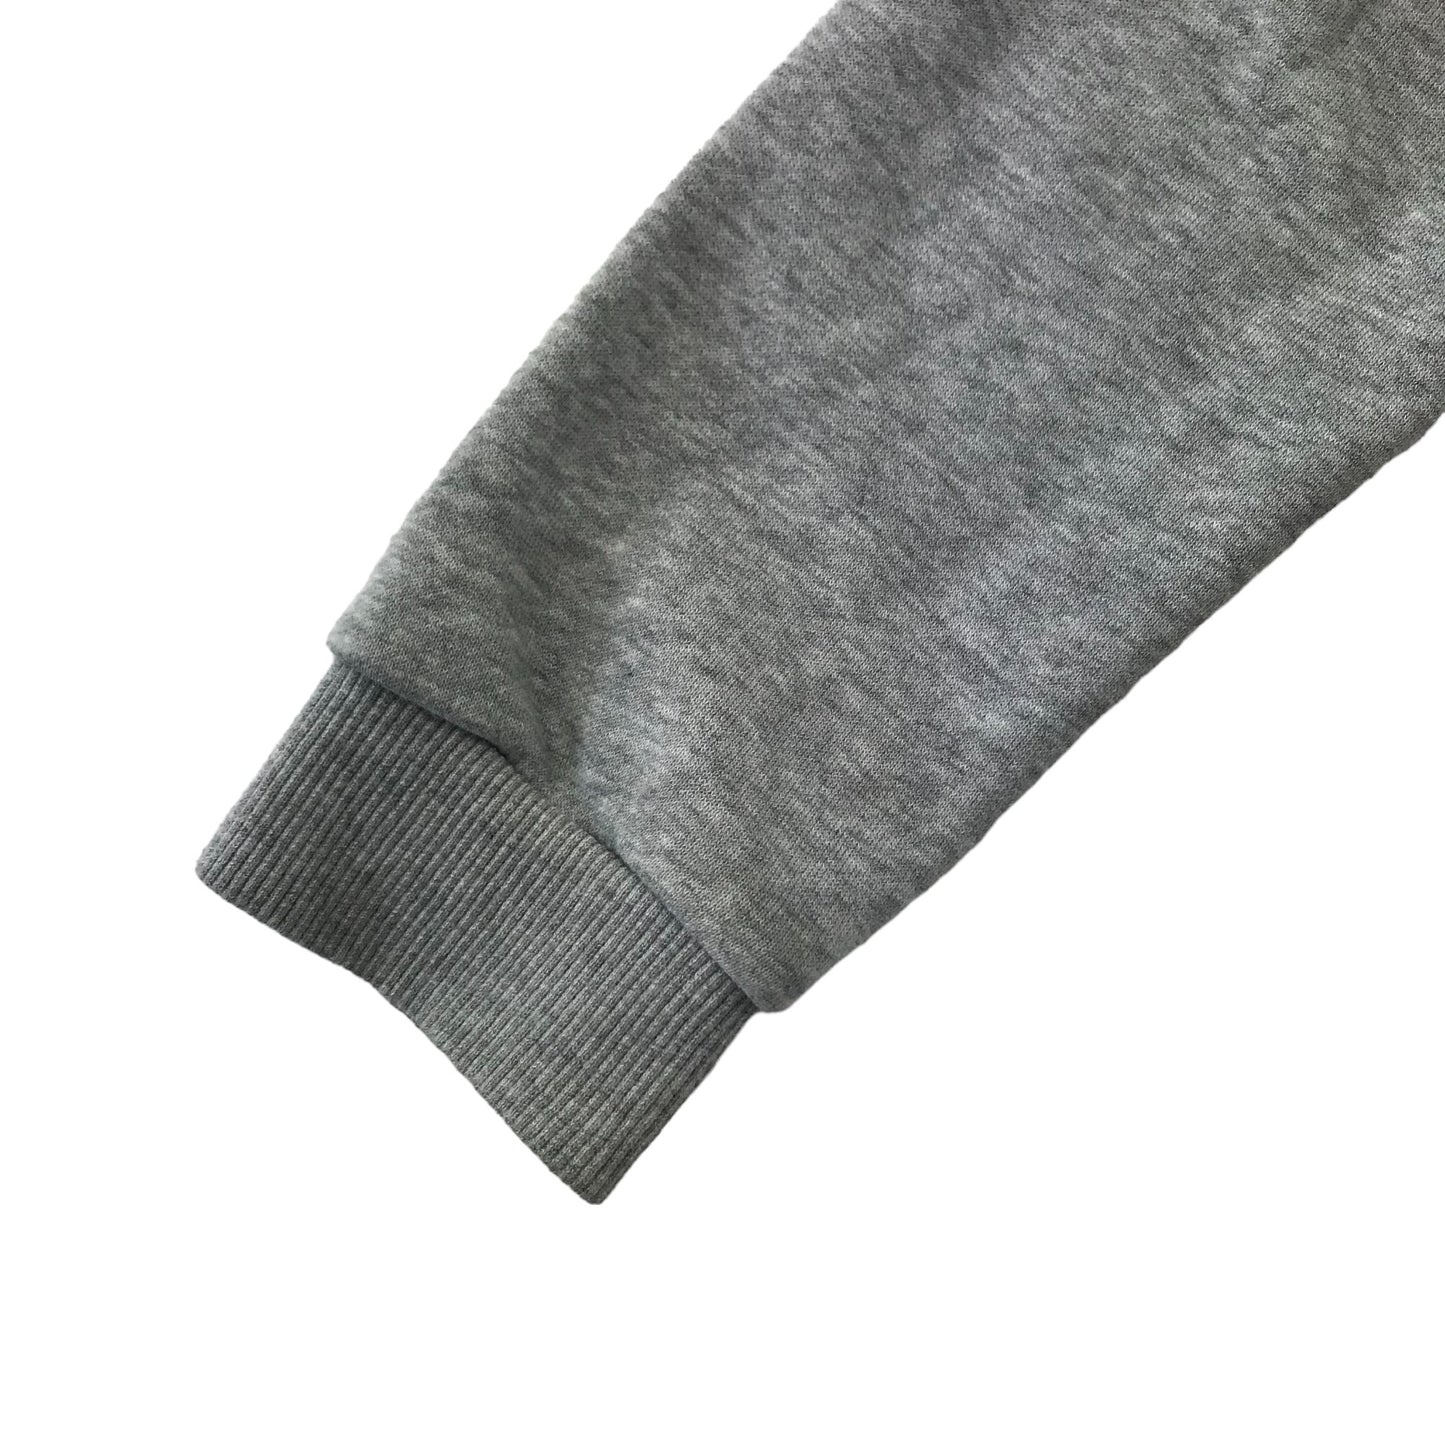 Adidas hoodie 9-10 years grey blue logo pullover